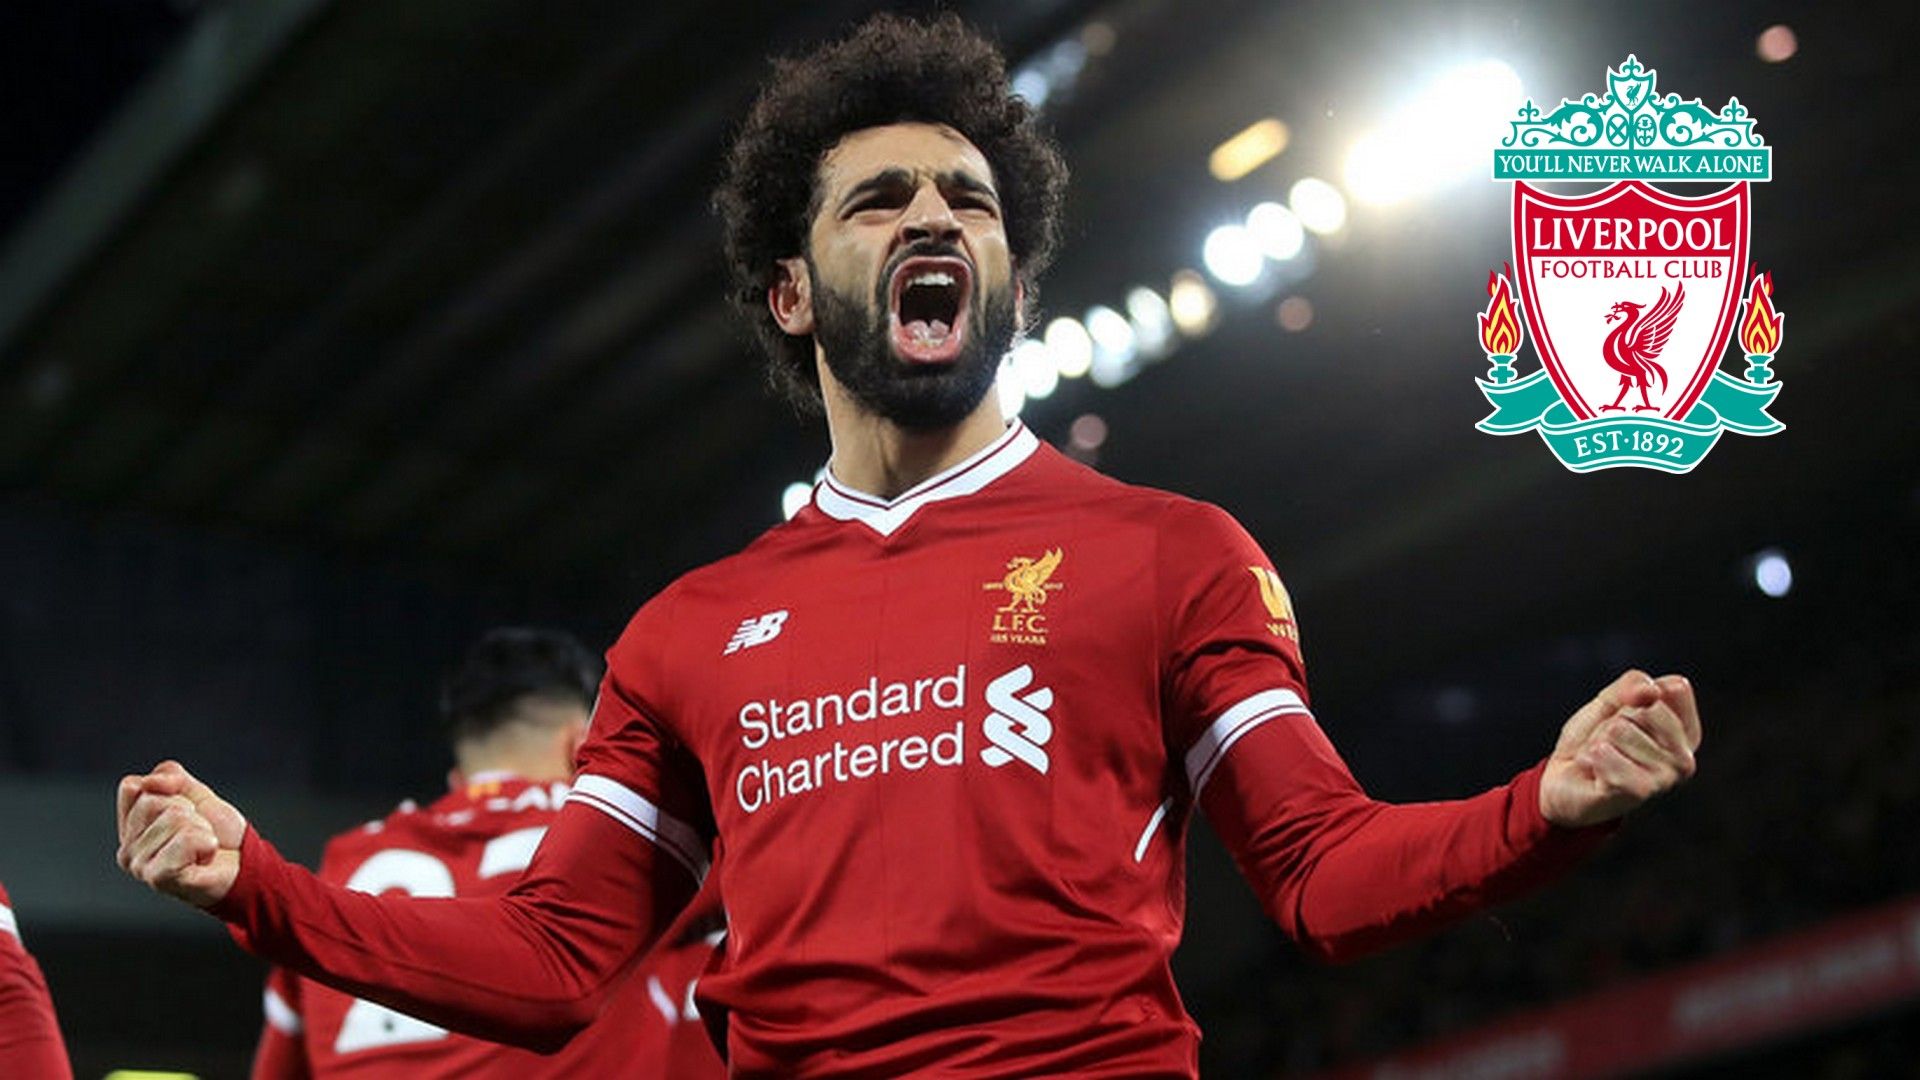 Liverpool Mohamed Salah Wallpaper Best HD